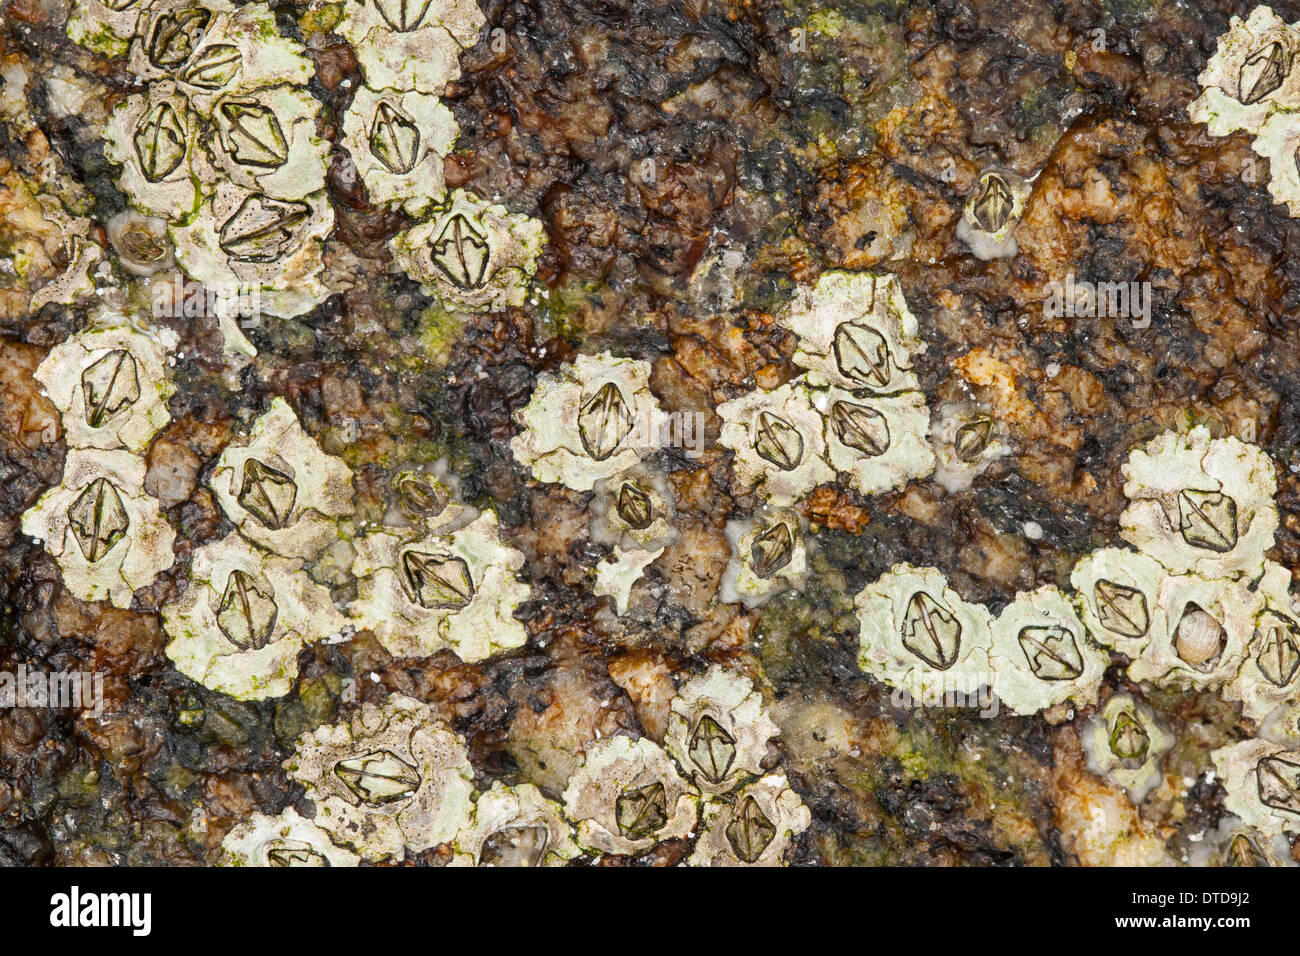 New Zealand barnacle, Australasian barnacle, Elminius modestus, Austrominius modestus, Australische Seepocke, Australseepocke Stock Photo